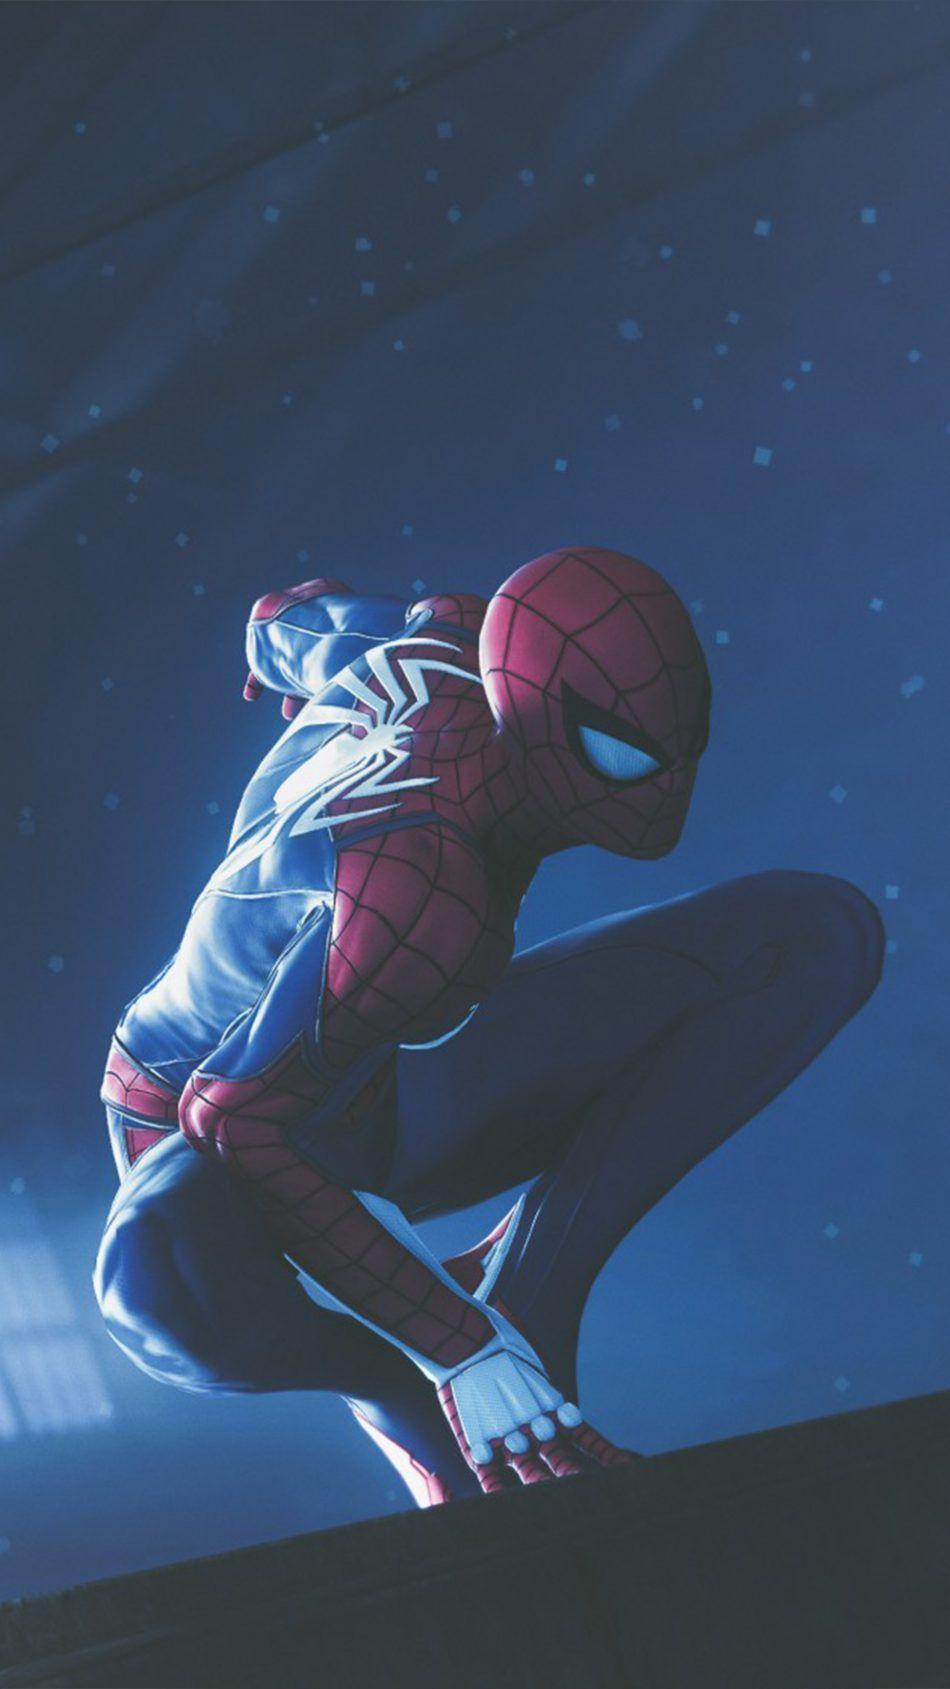 Spider Man PS4 2018 4K Ultra HD Mobile Wallpaper. Spiderman, Amazing spiderman, Marvel spiderman